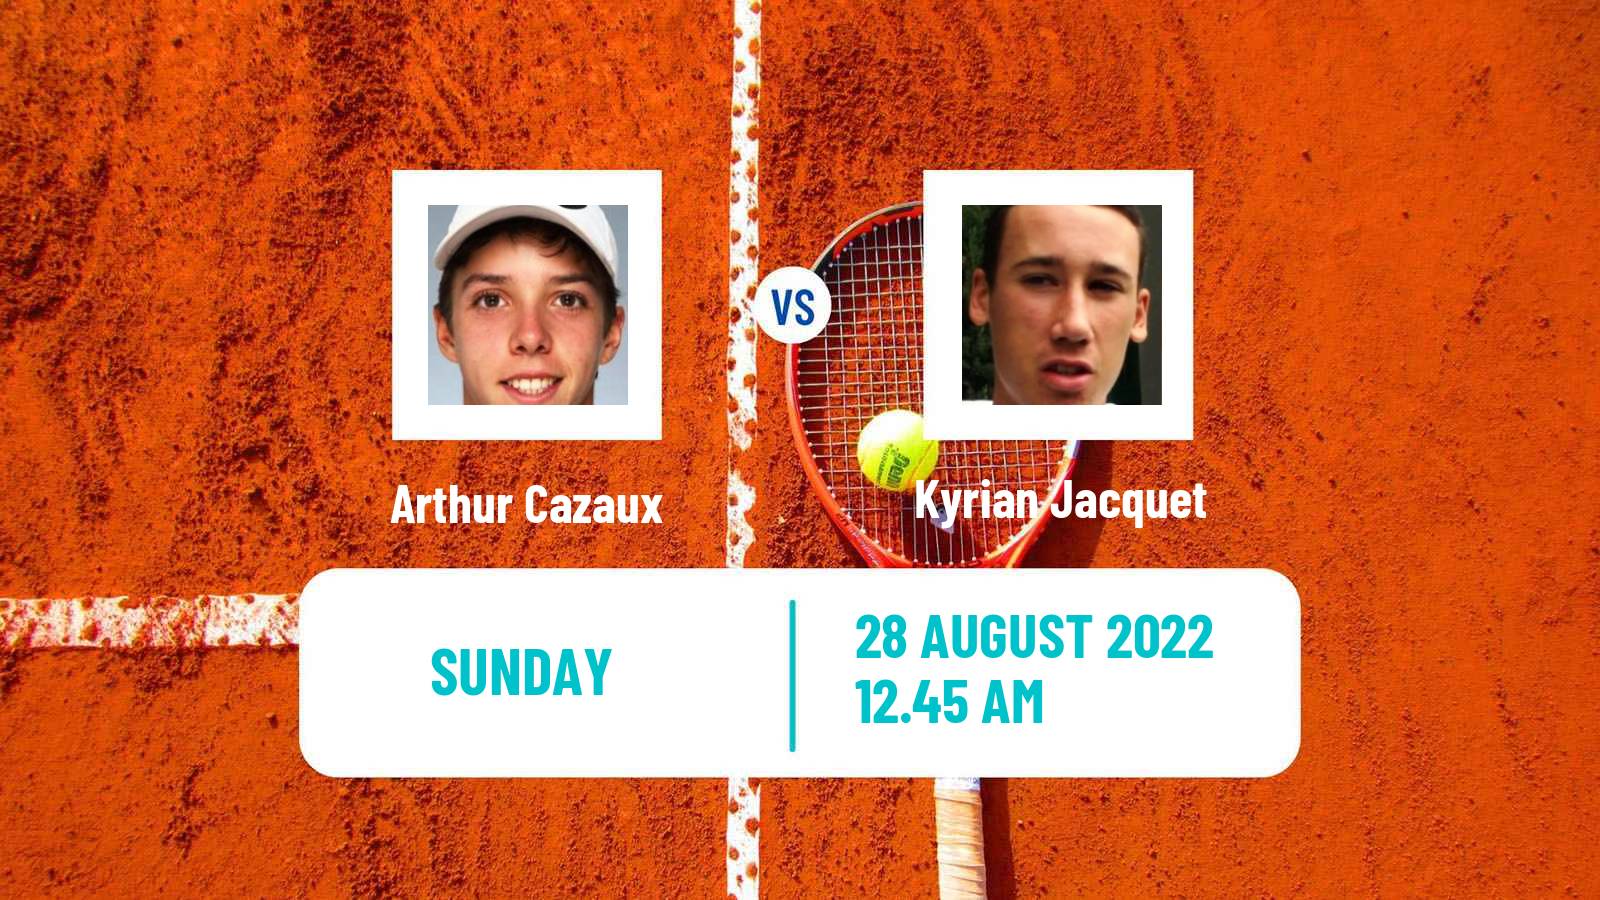 Tennis ATP Challenger Arthur Cazaux - Kyrian Jacquet